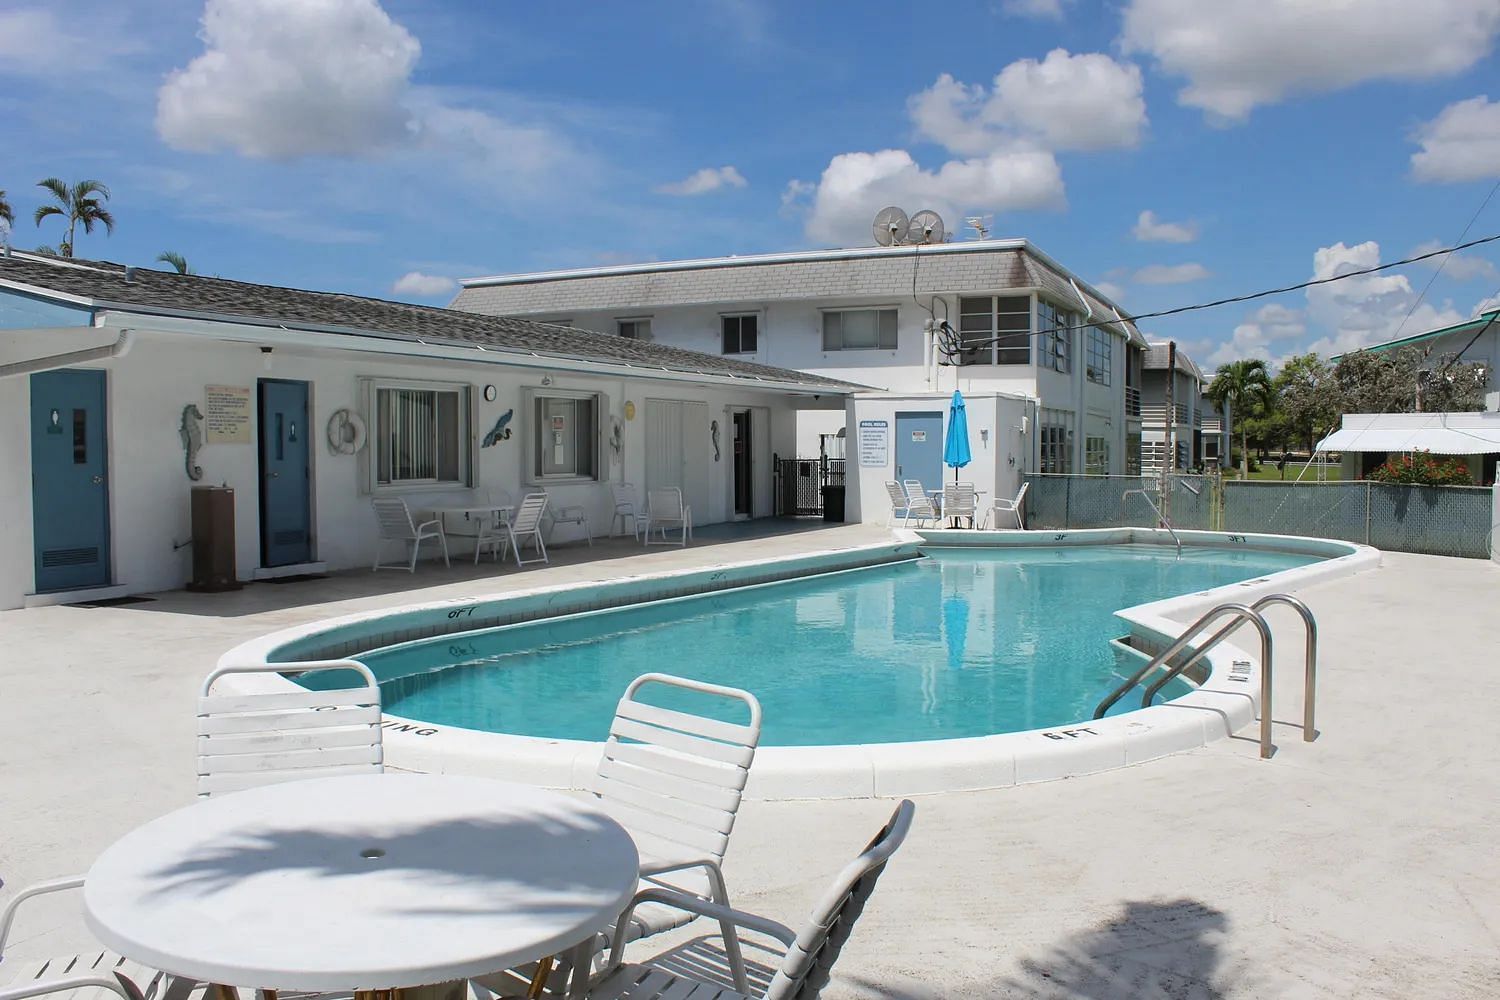 JWguest Condominium at Lake Worth Beach, Florida | Sunny Florida Vacation Condo-West Palm Beach | Jwbnb no brobnb 2